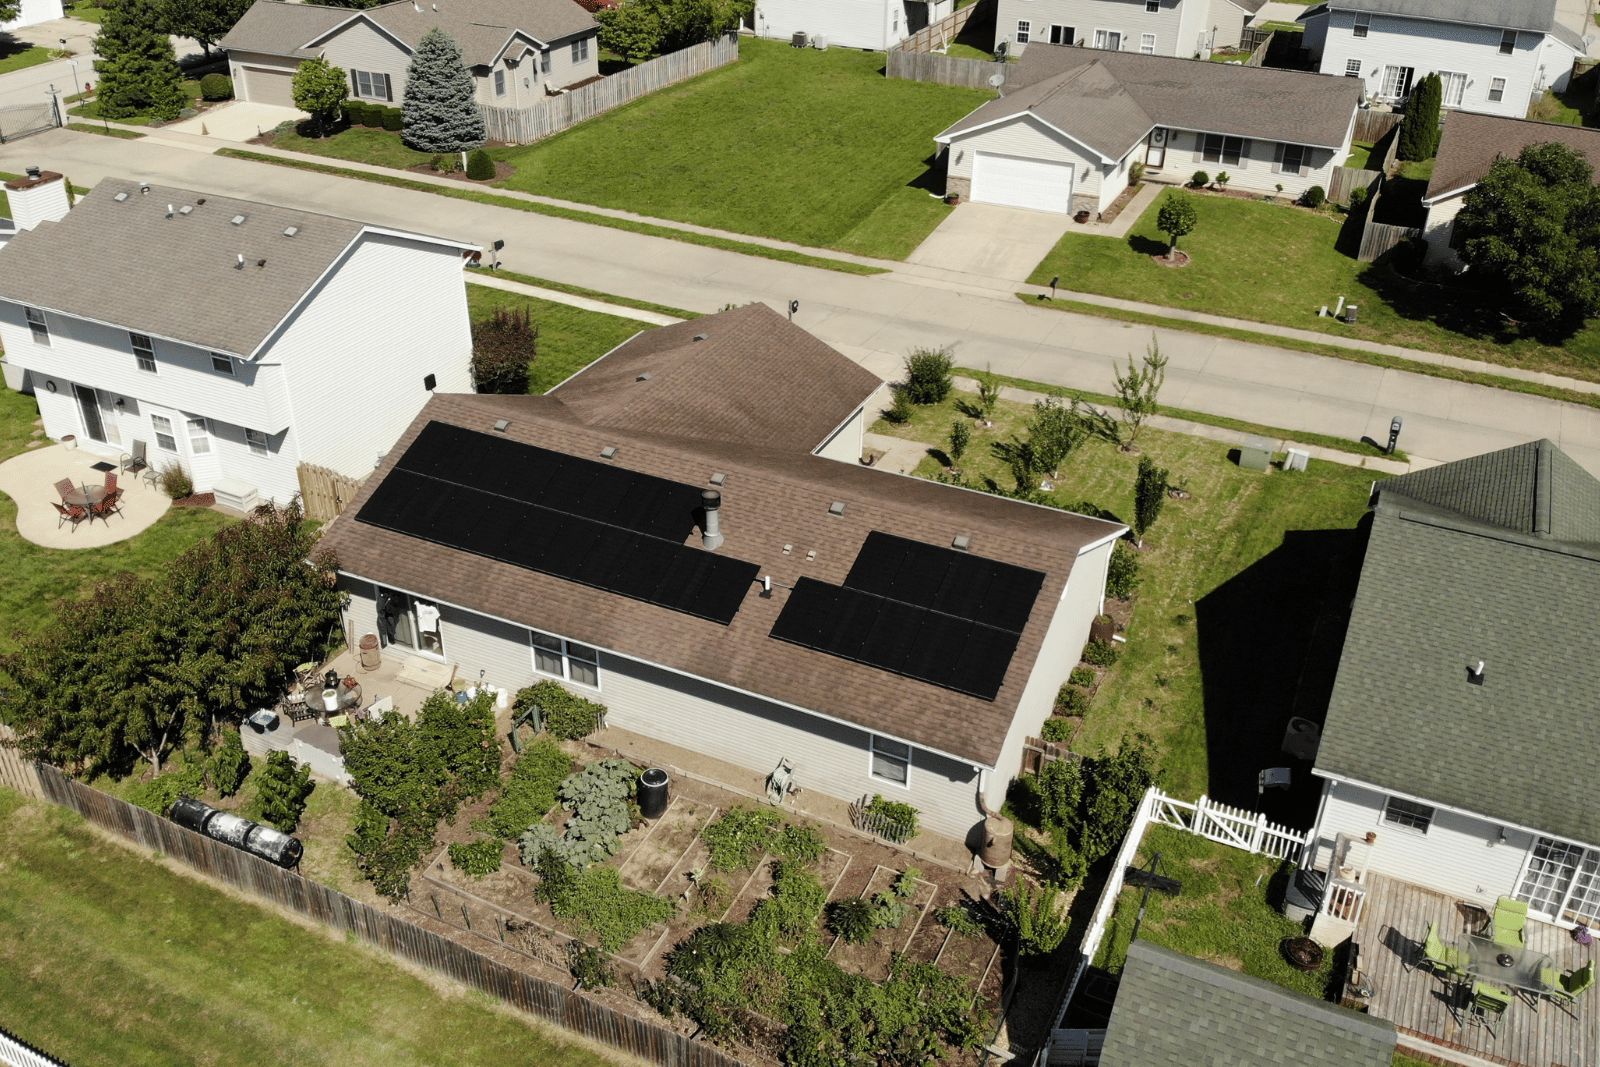 Solar Installation in Central Illinois